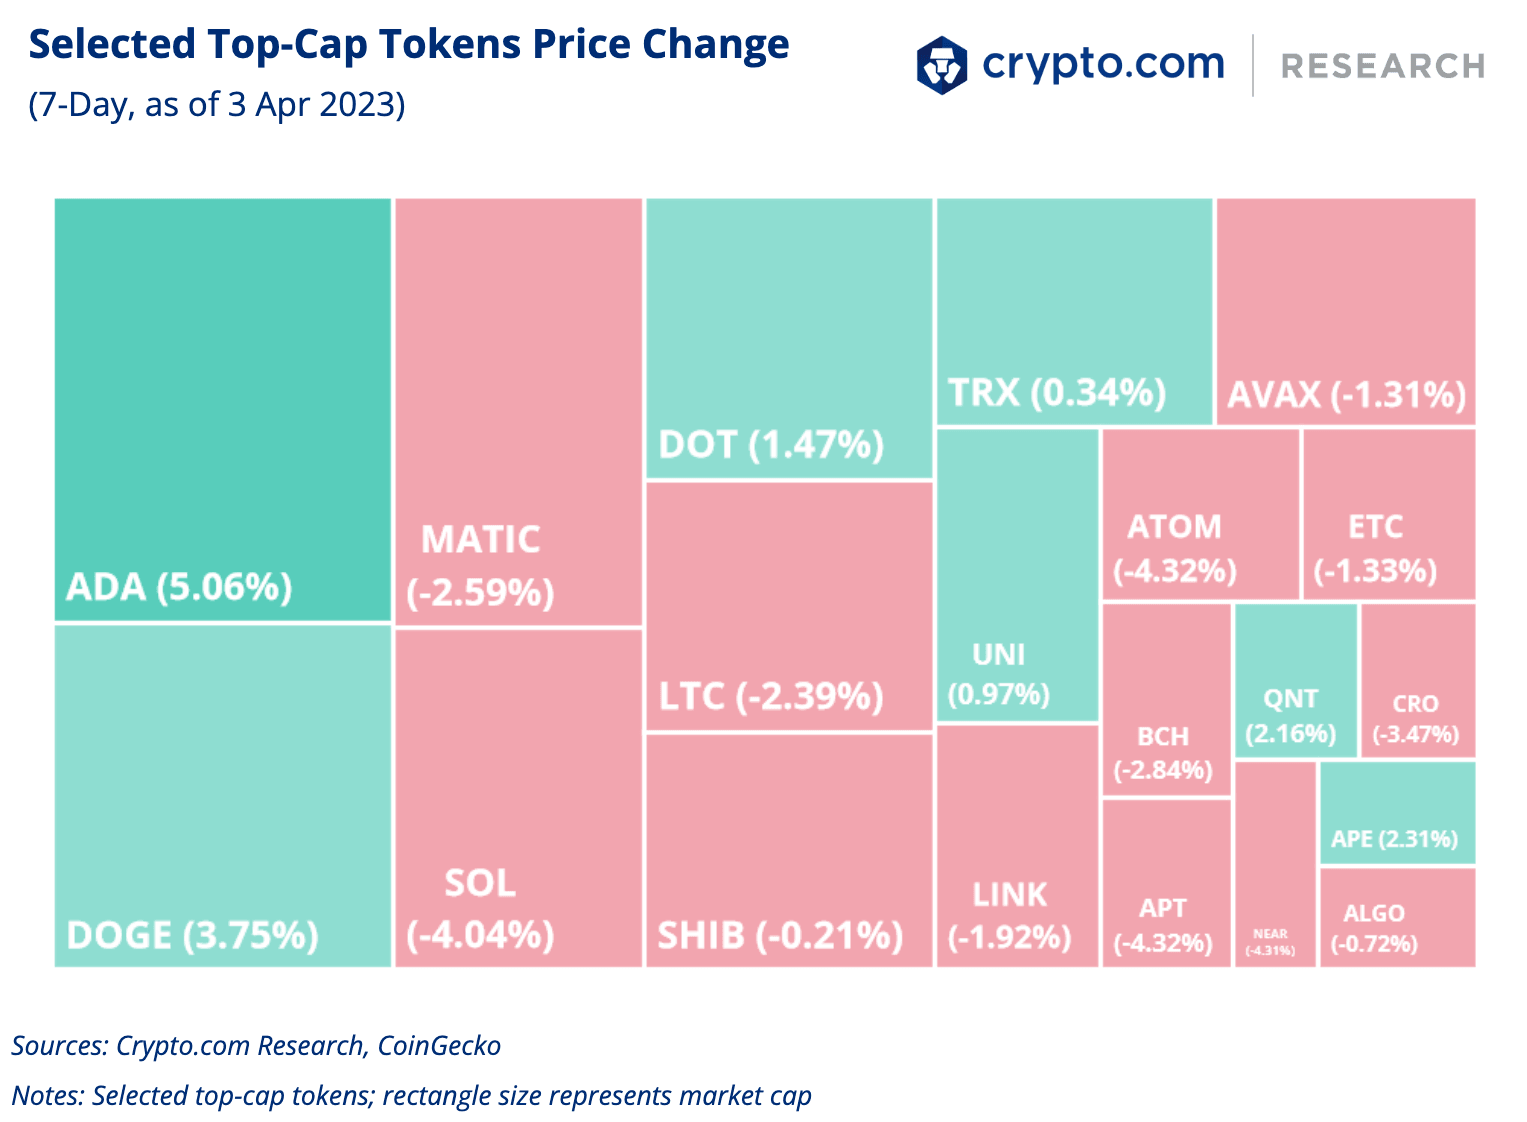 Selected Top Cap Tokens Price Change 3 Apr